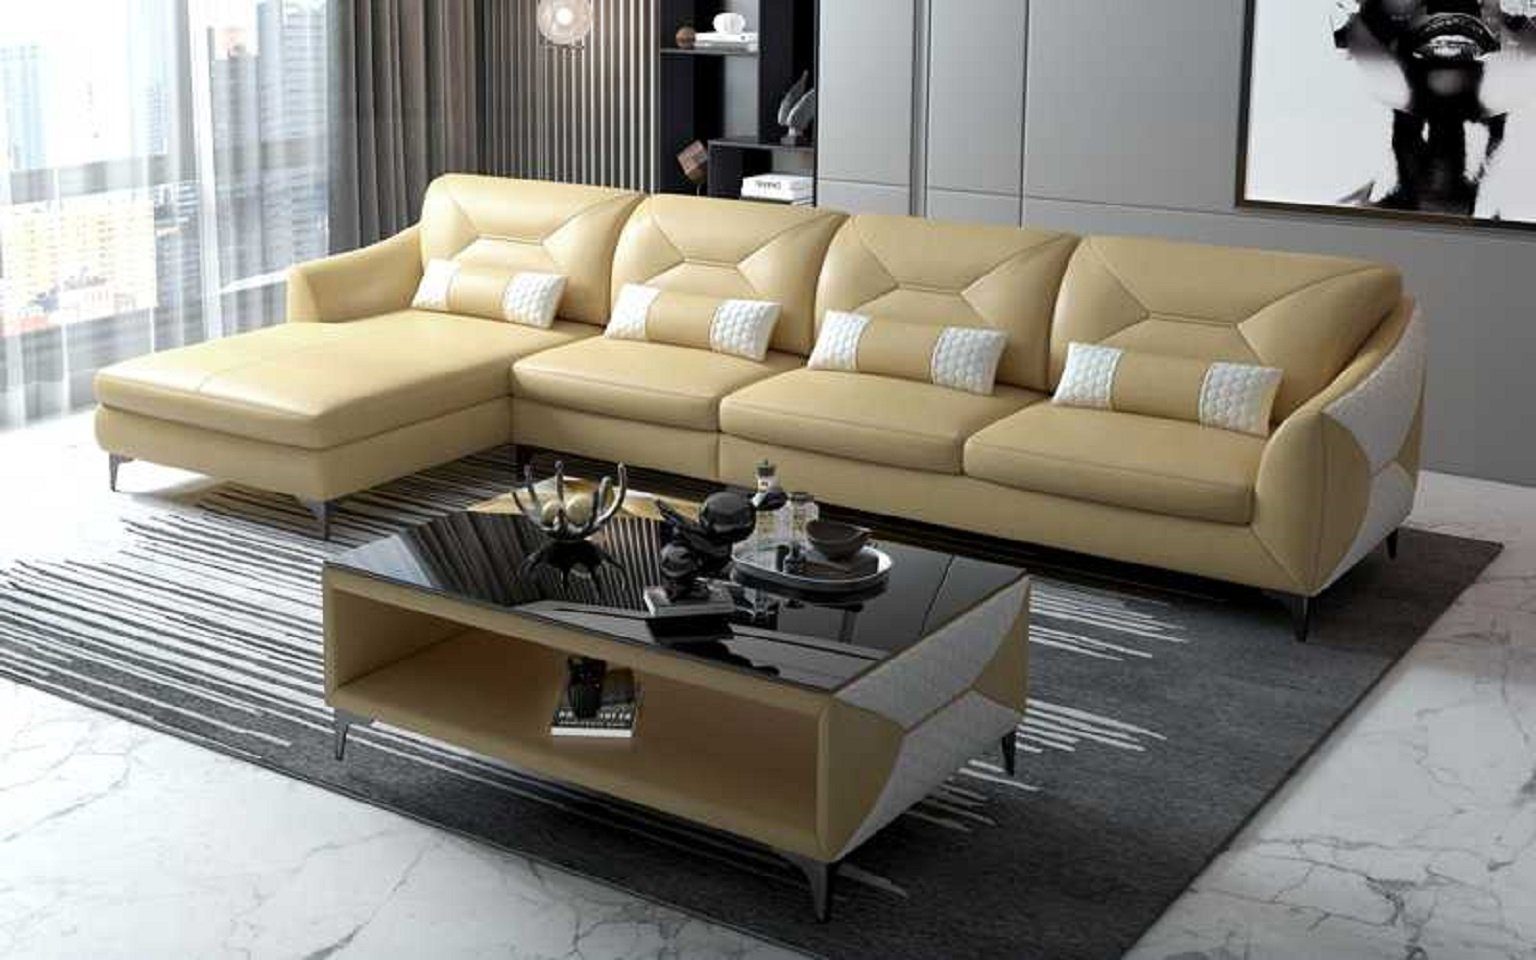 JVmoebel Ecksofa Modern Eckgarnitur Ecksofa L Form Liege Couch Sofa Luxus Neu, 3 Teile, Made in Europe Beige